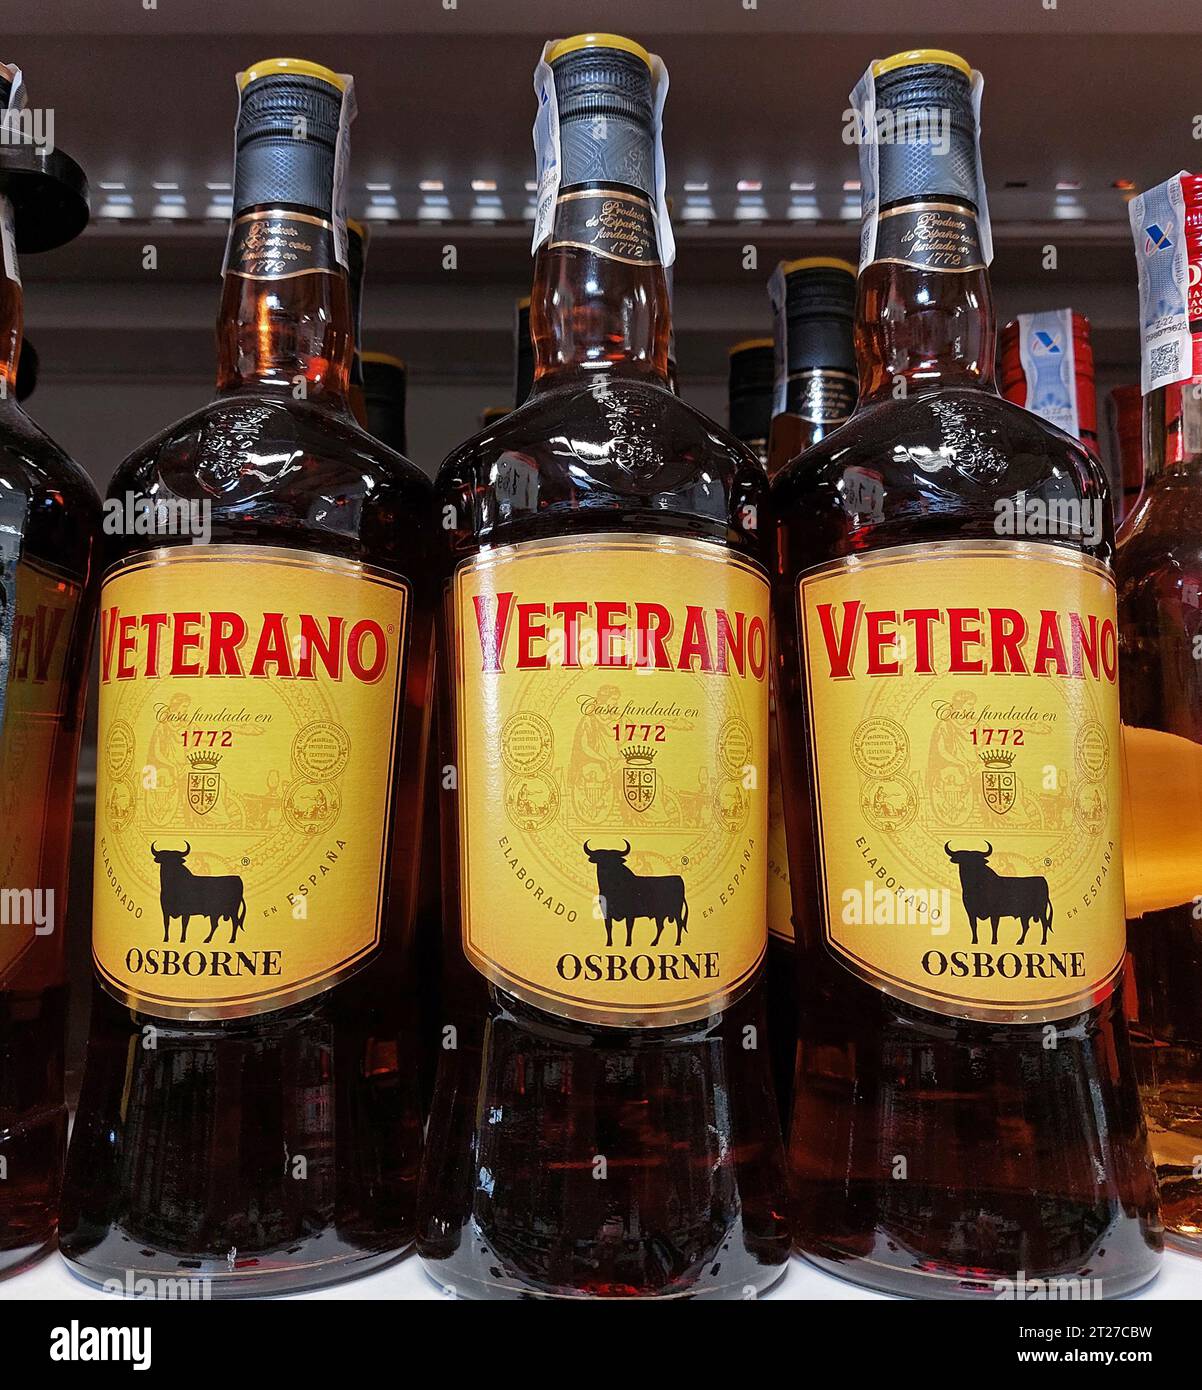 Osborne Veterano brandy bottles in a supermarket Stock Photo